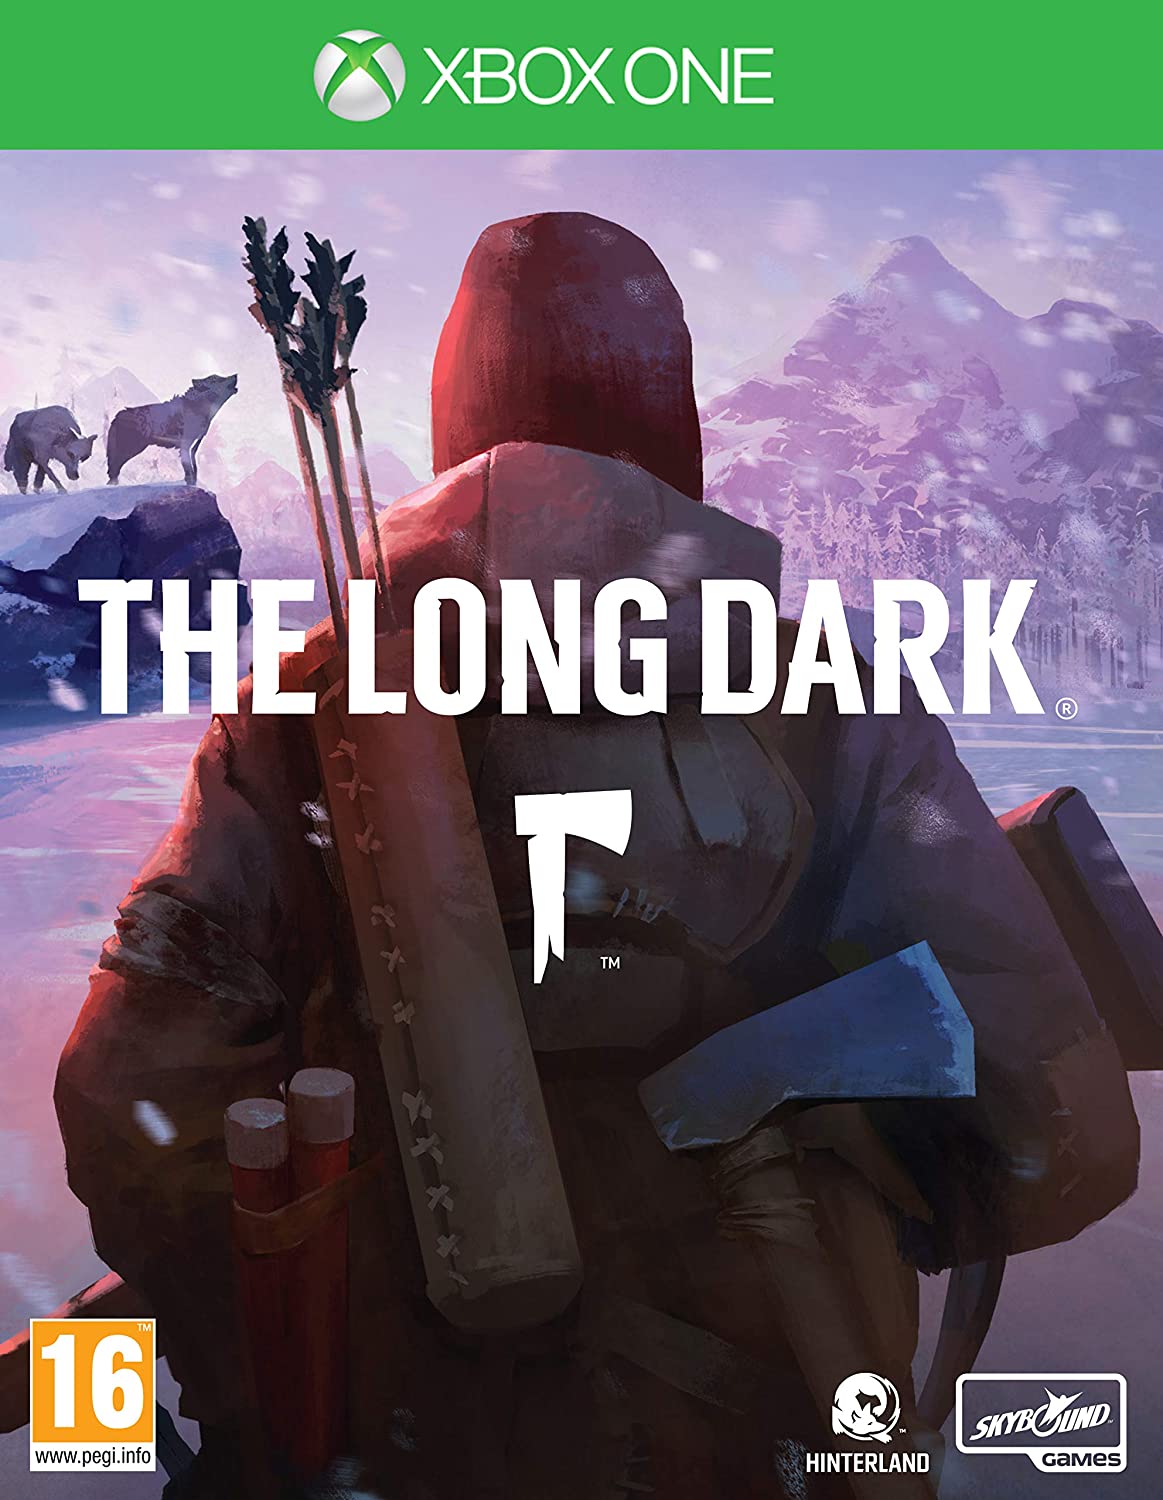 The Long Dark (Xbox One / Series)